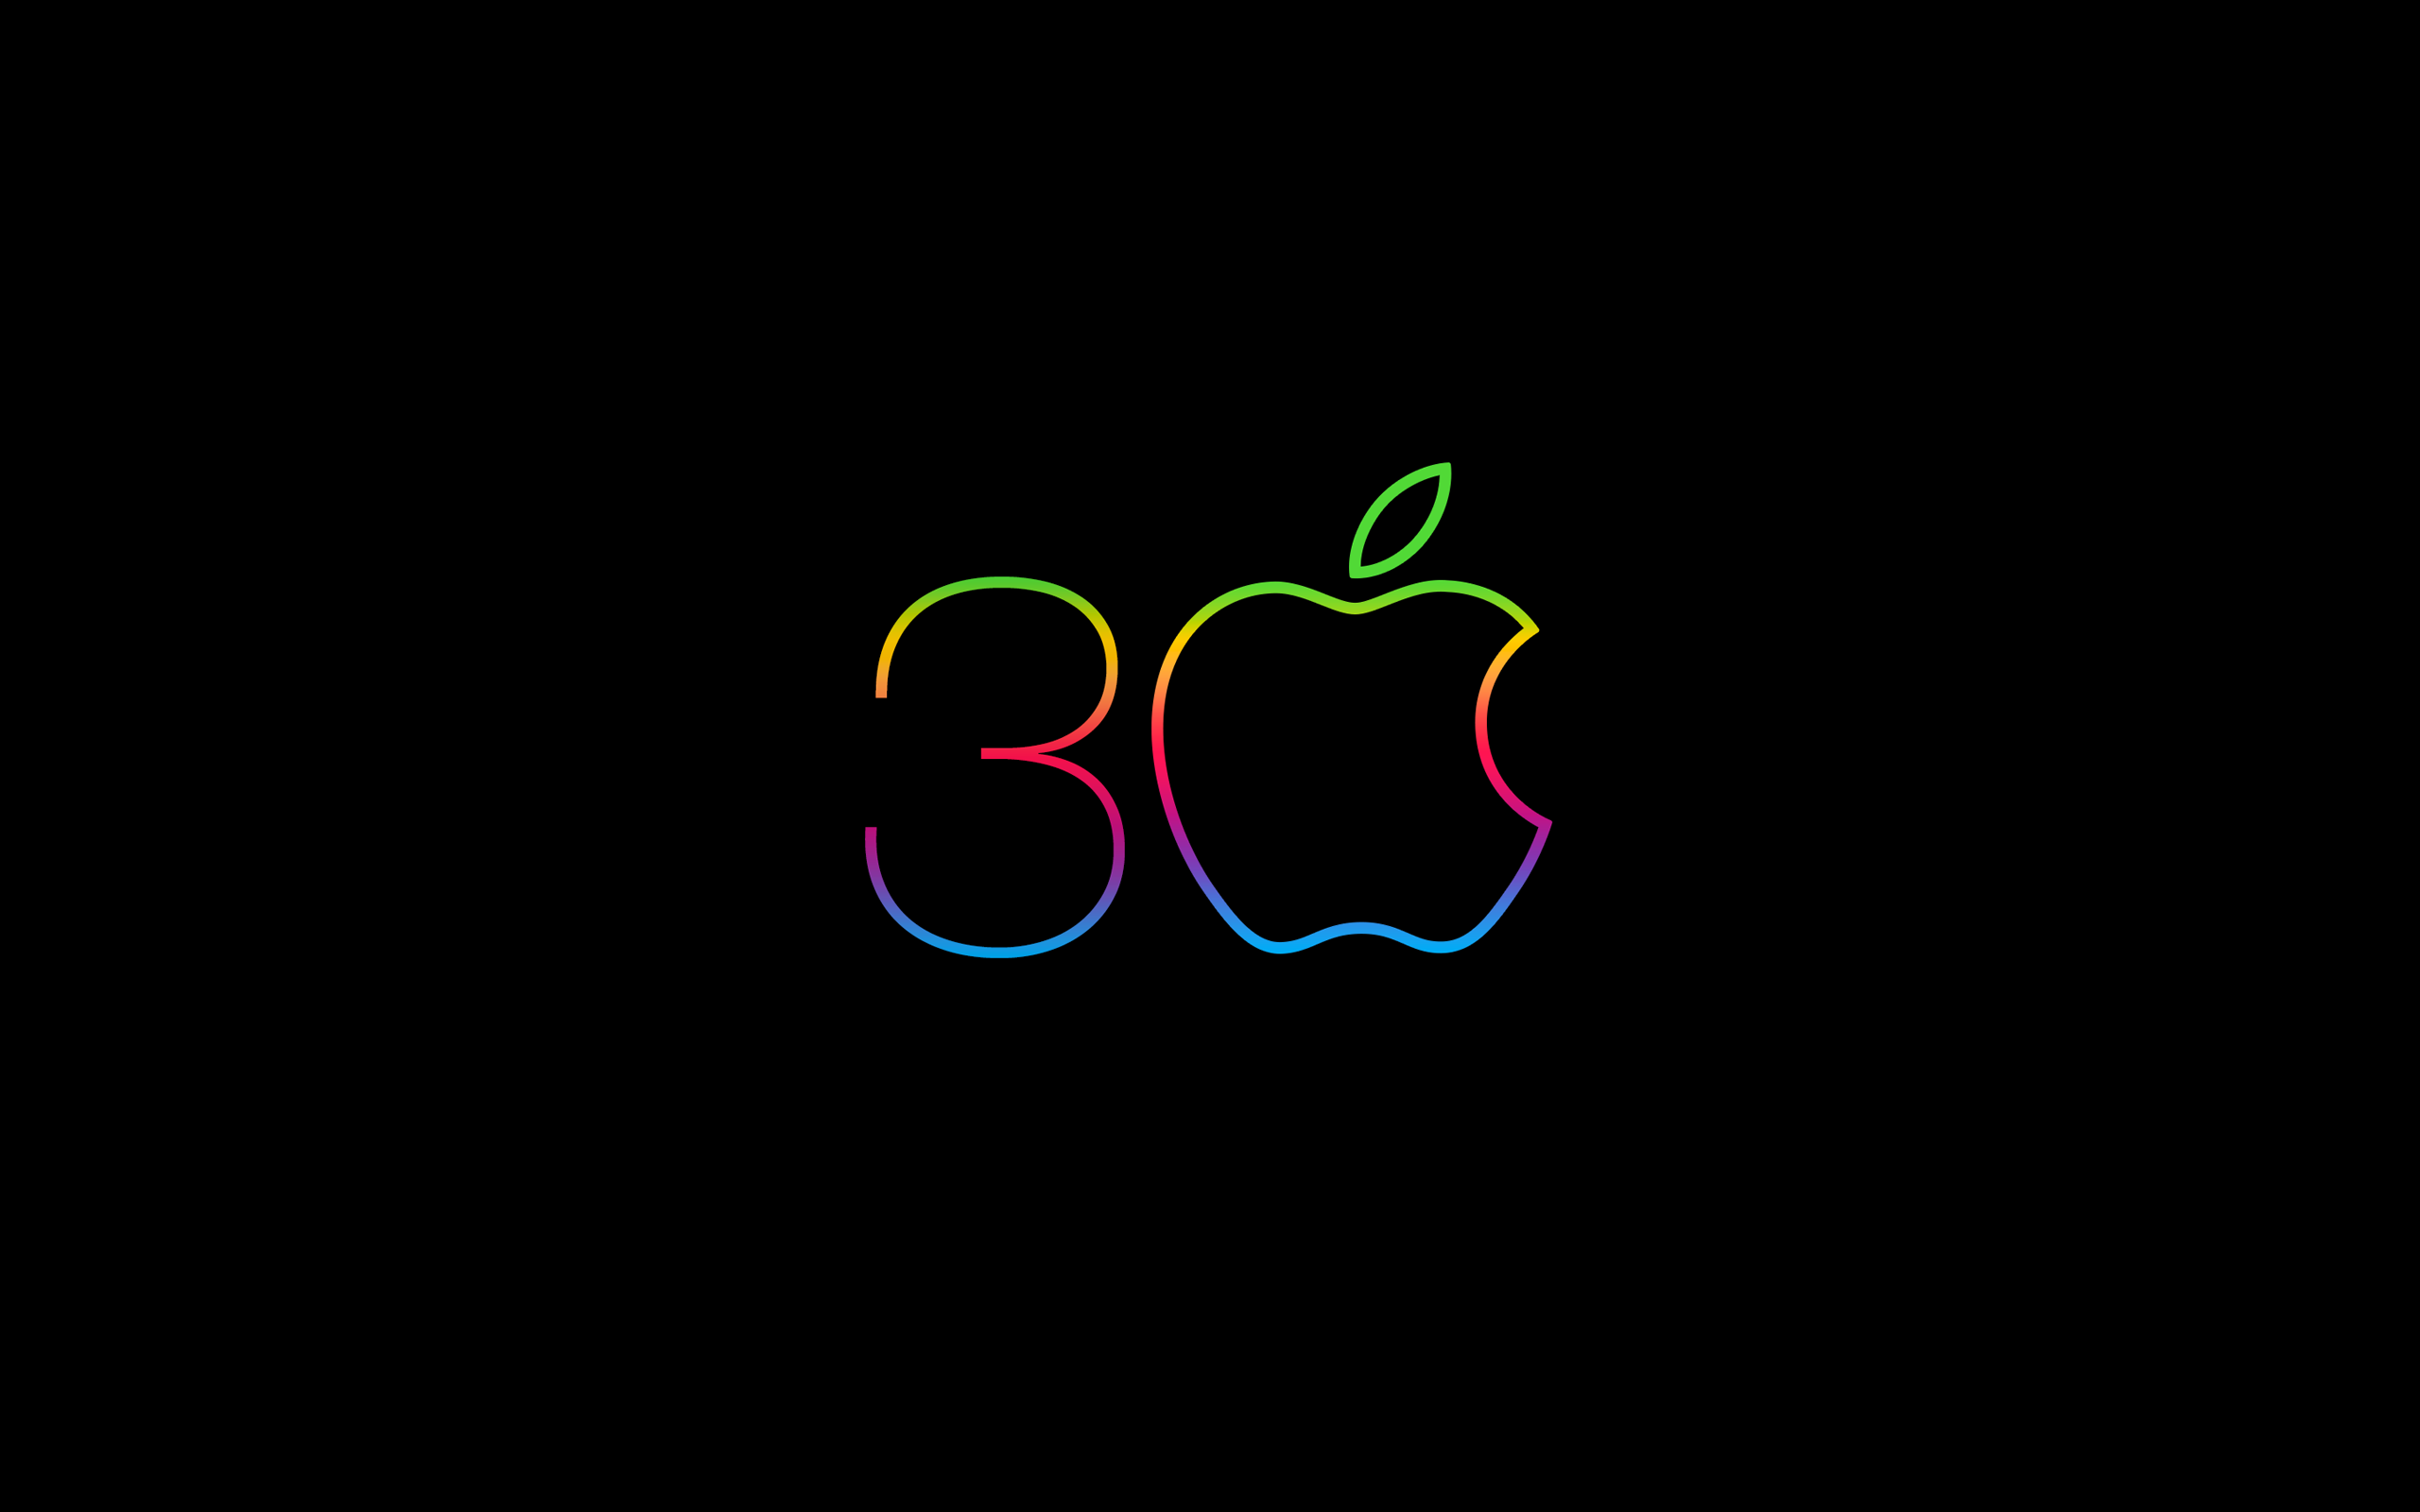 30 years of Macintosh wallpapers (iPhone, iPad, Mac) on Behance